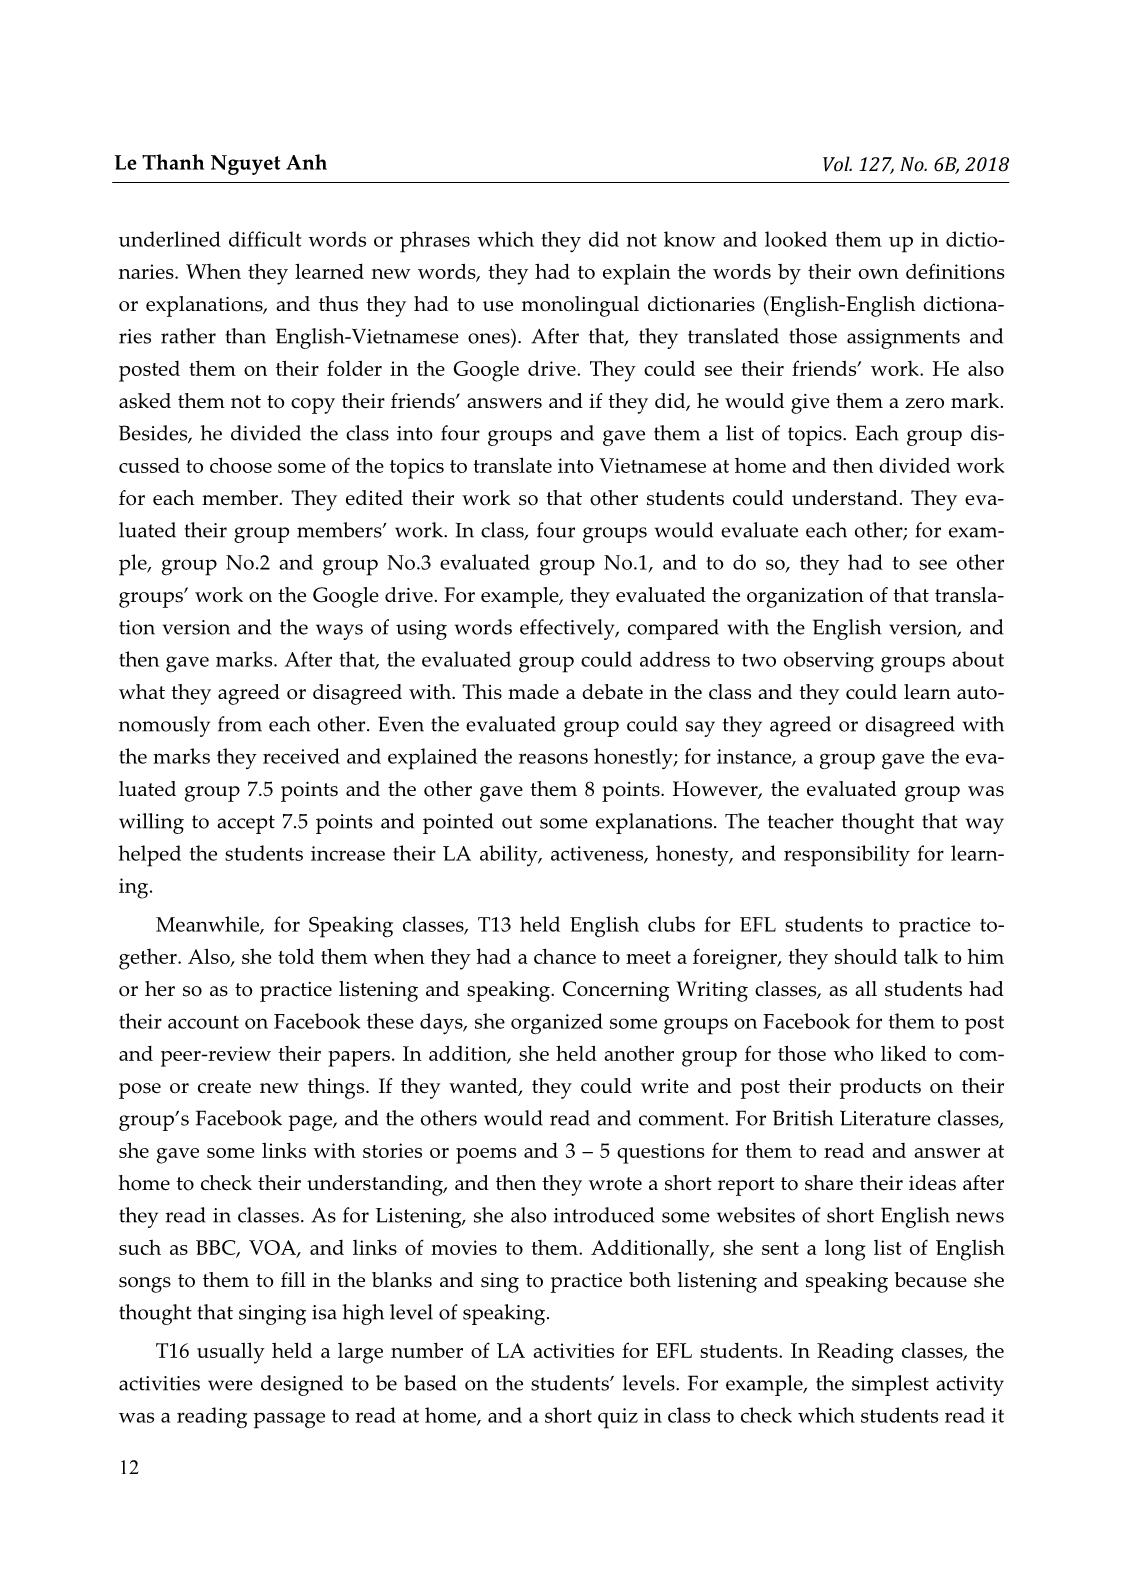 EFL teachers’ perceptions and practices regarding learner autonomy at Dong Thap University, Vietnam trang 8